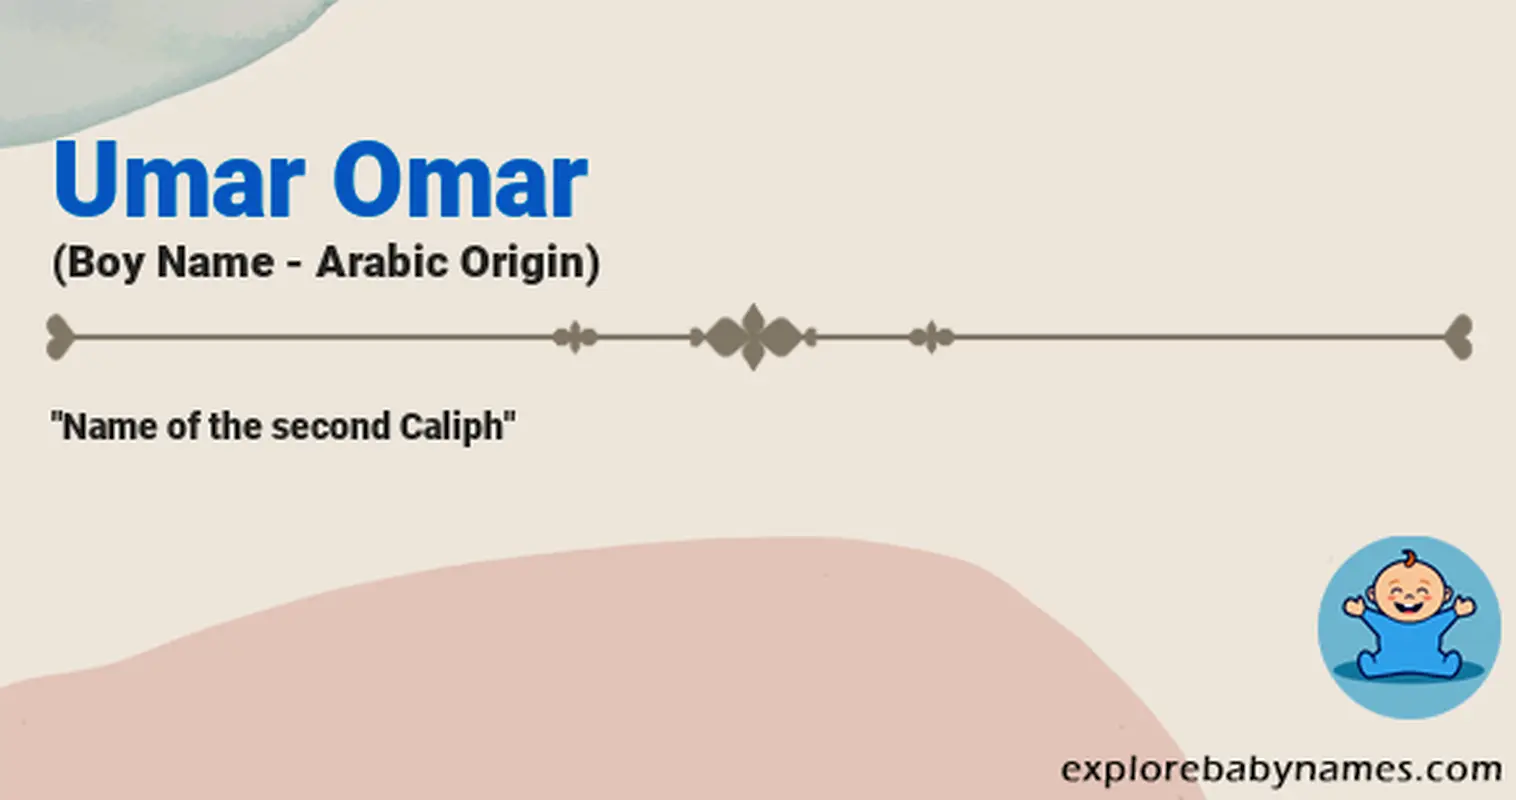 Meaning of Umar Omar